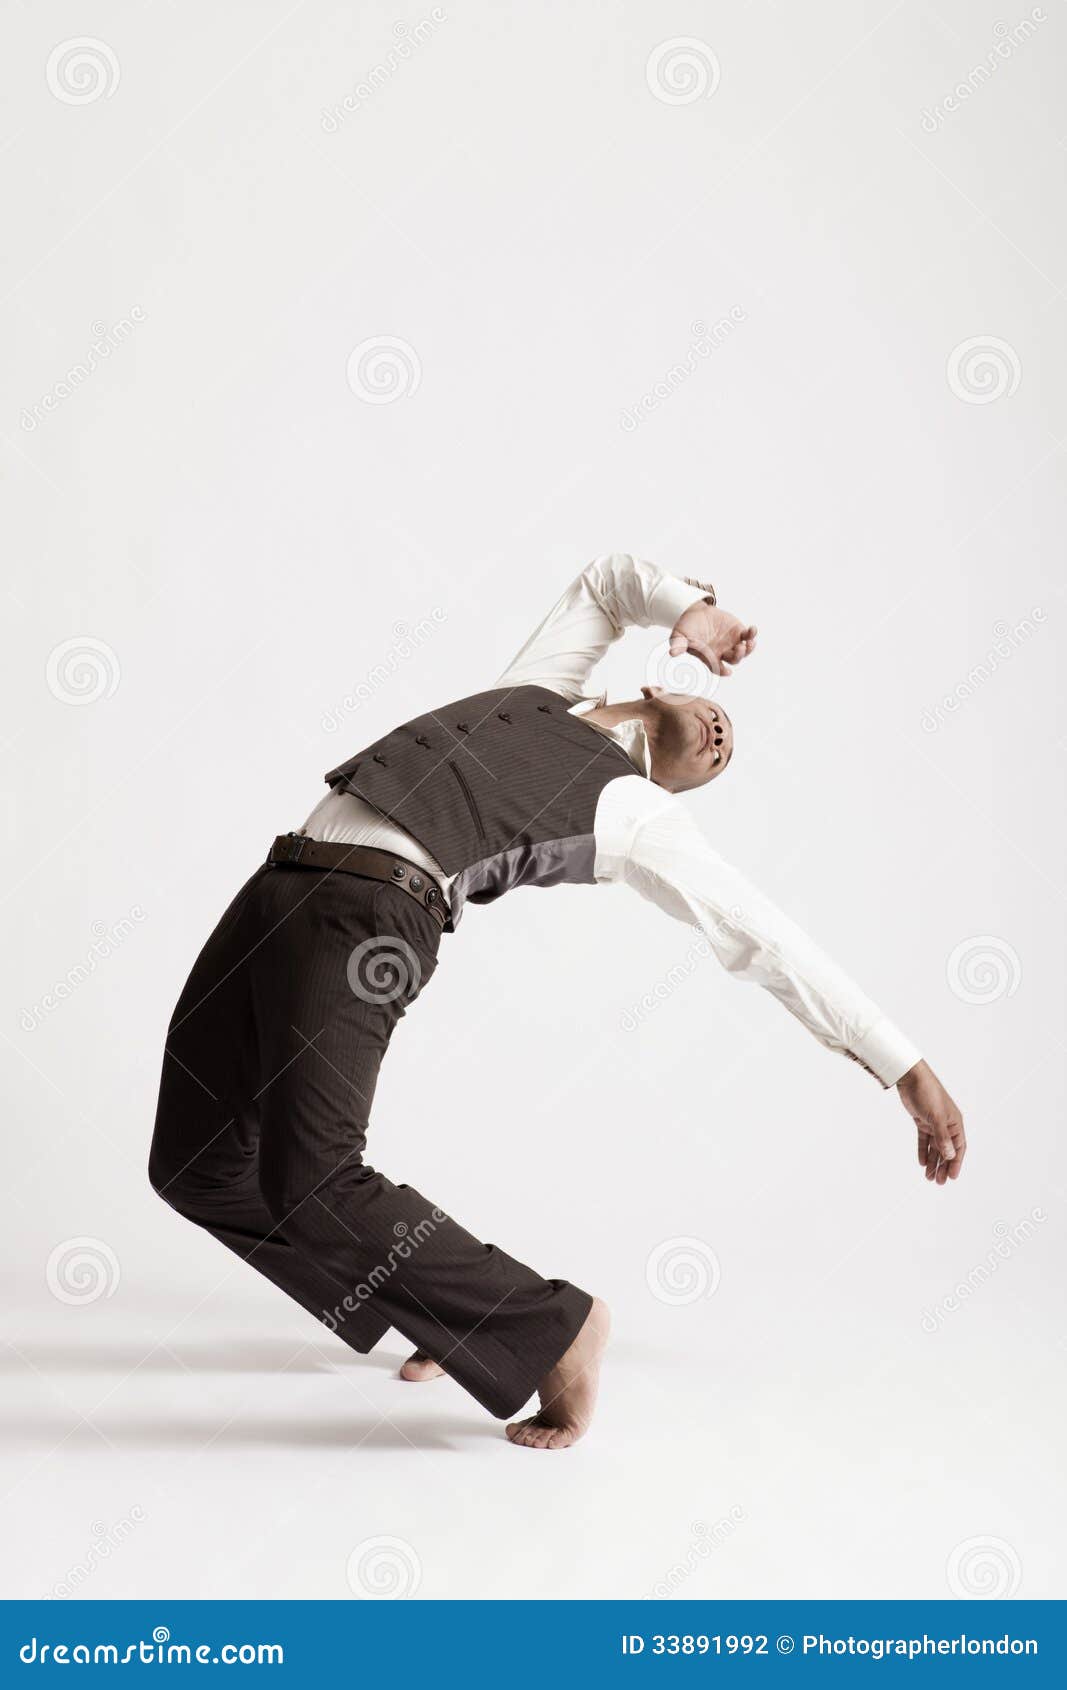 man dancing jazz over white background